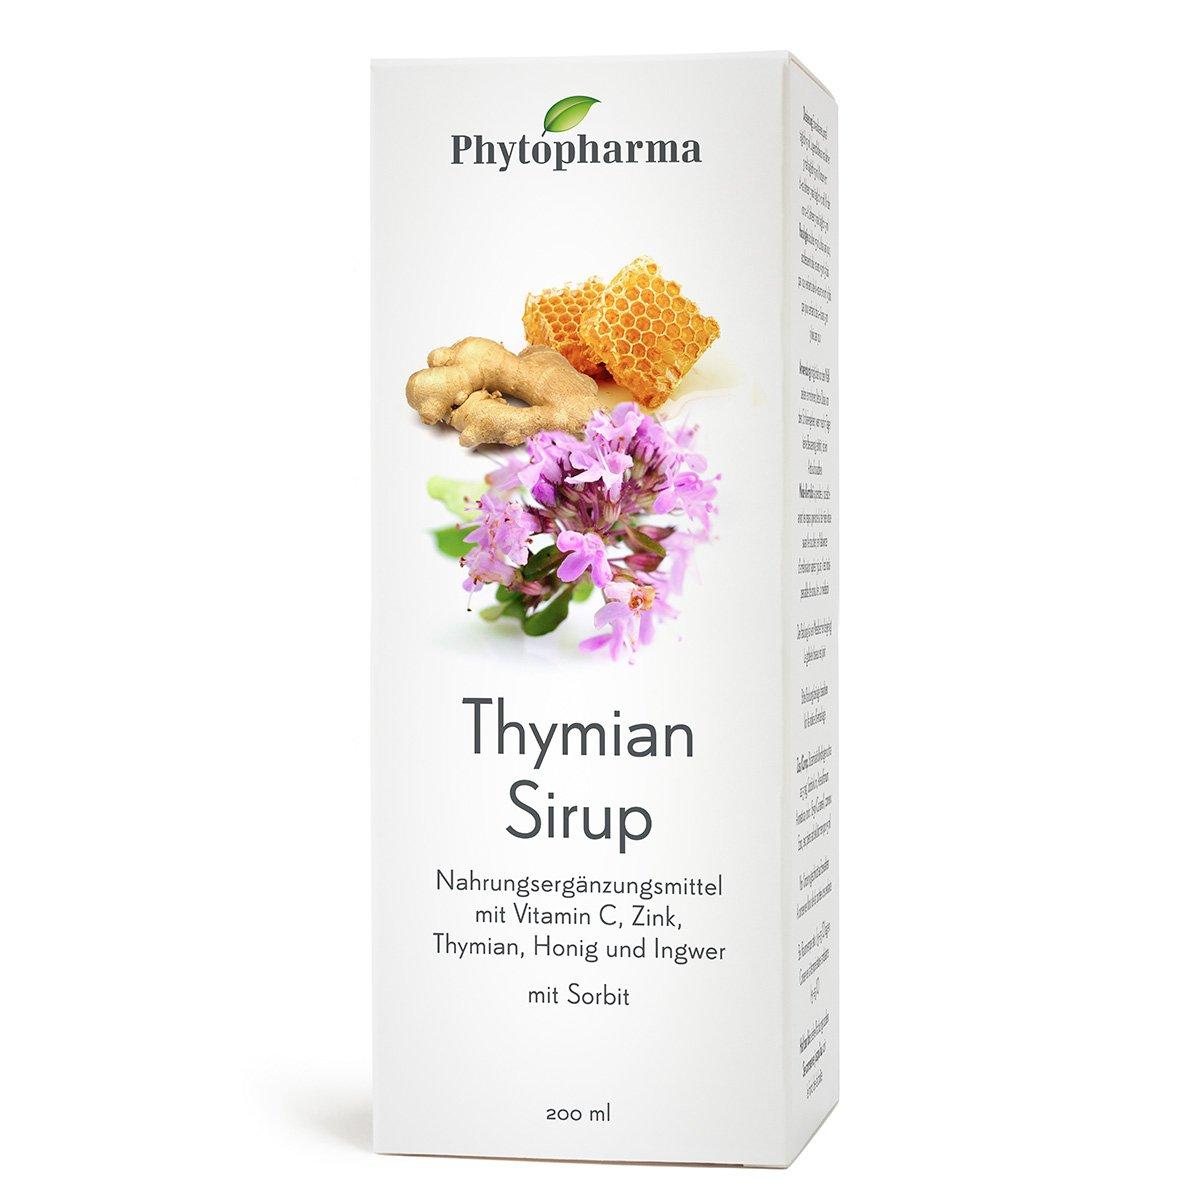 Image of Phytopharma Thymian Sirup Nahrungsergänzungsmittel - 200ml